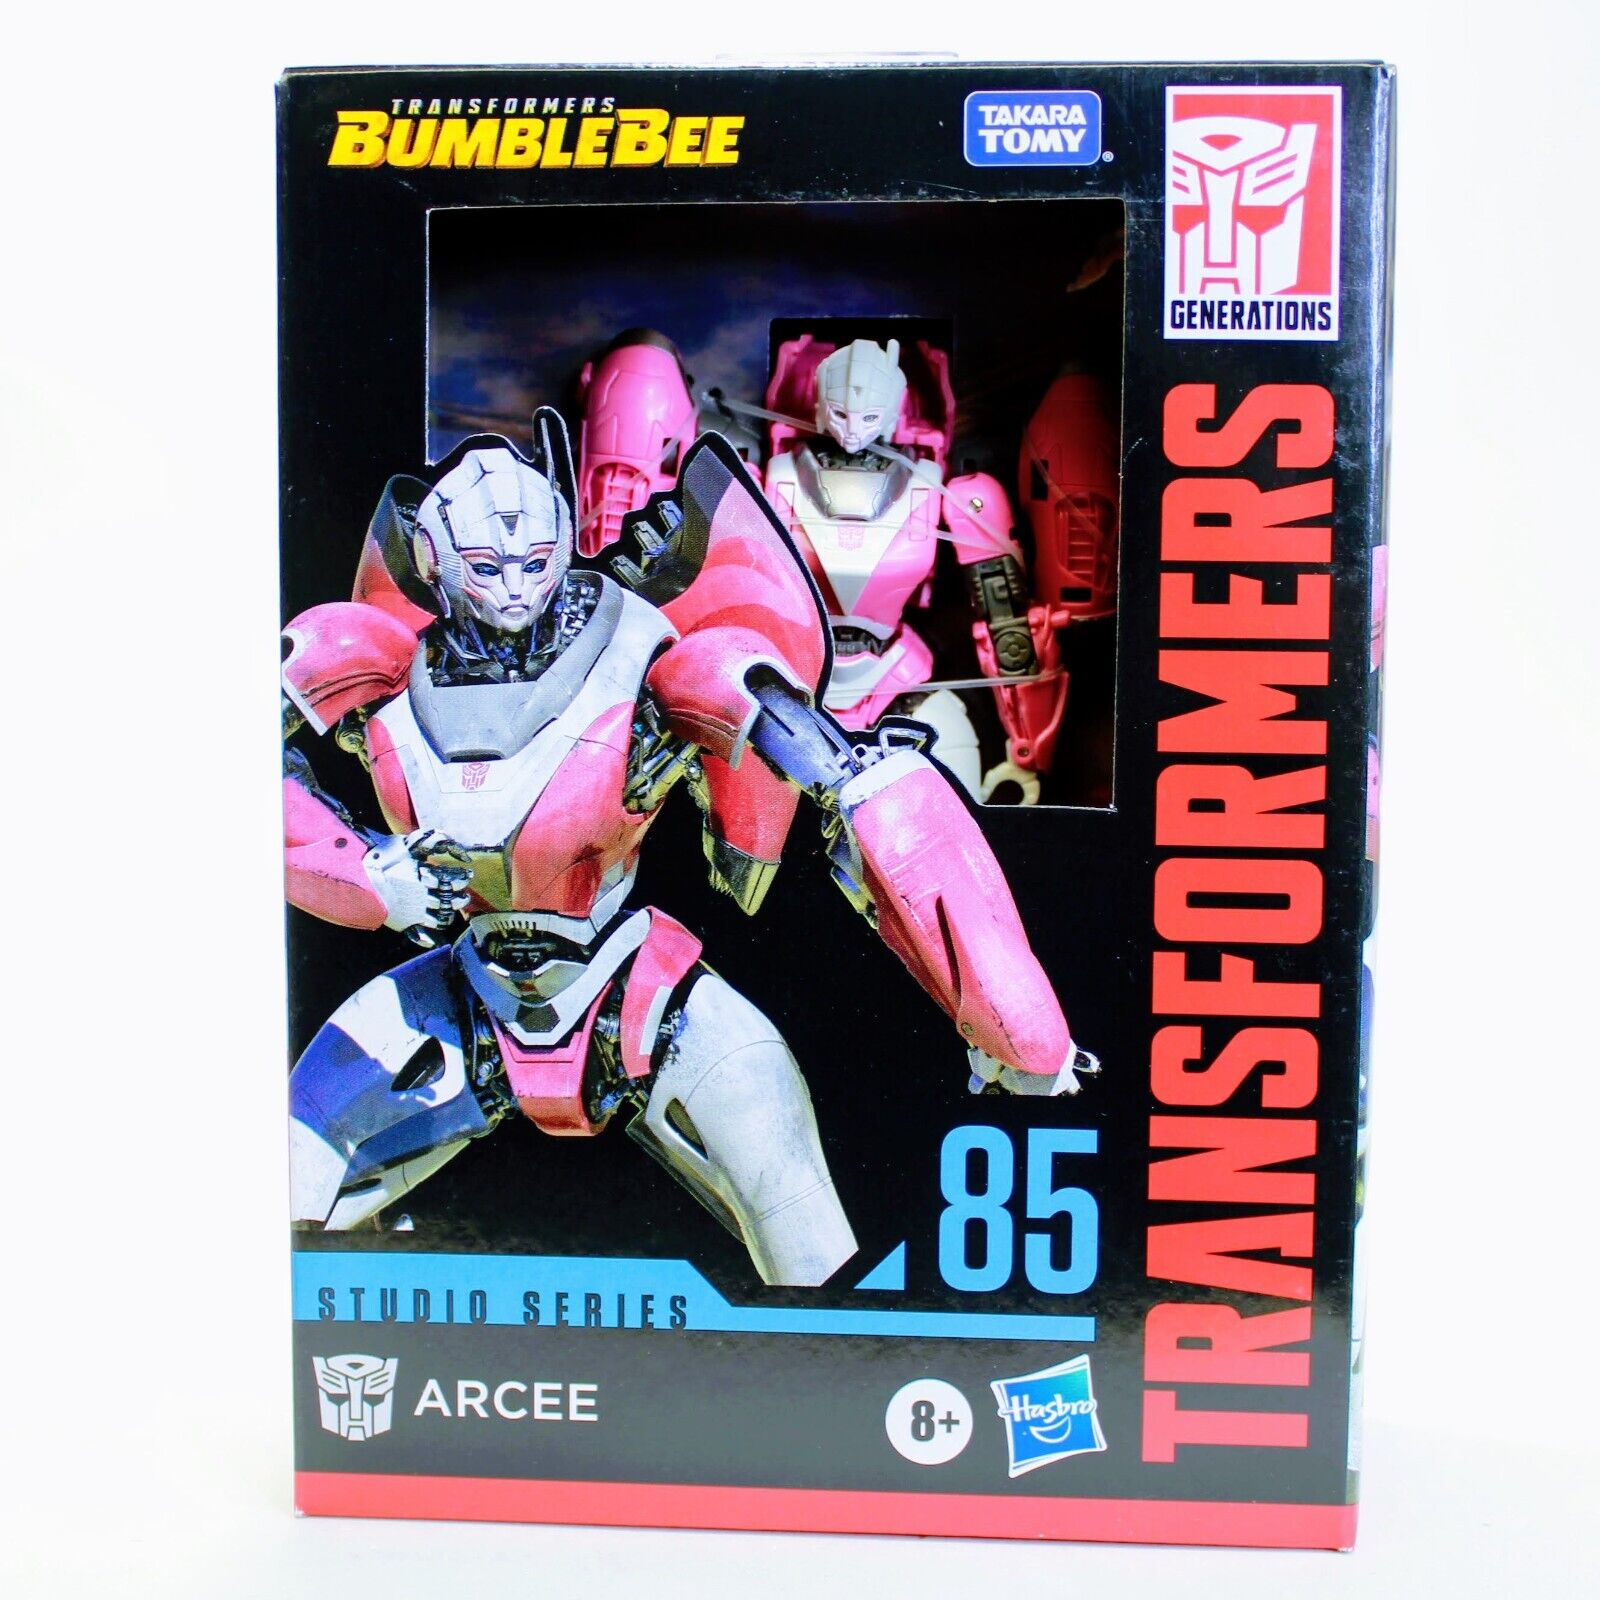 Transformers Studio Series 85 Arcee - Deluxe Class Bumblebee Movie Hasbro Figure